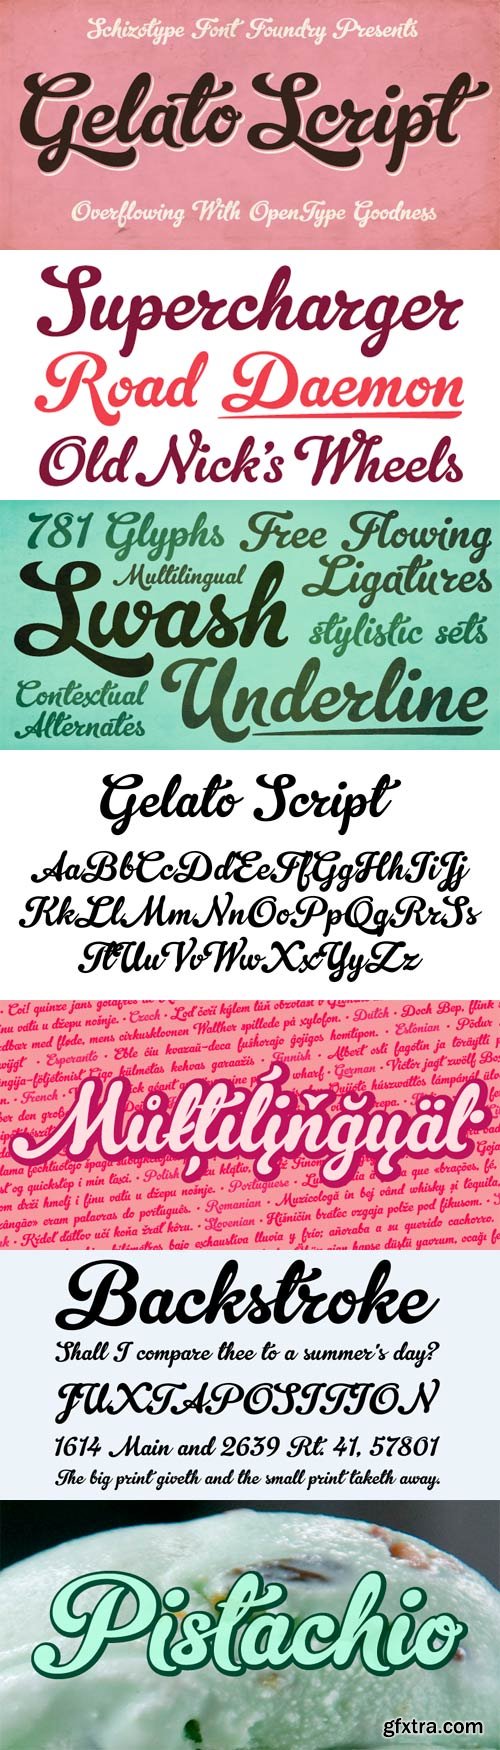 Gelato Script Font for $60